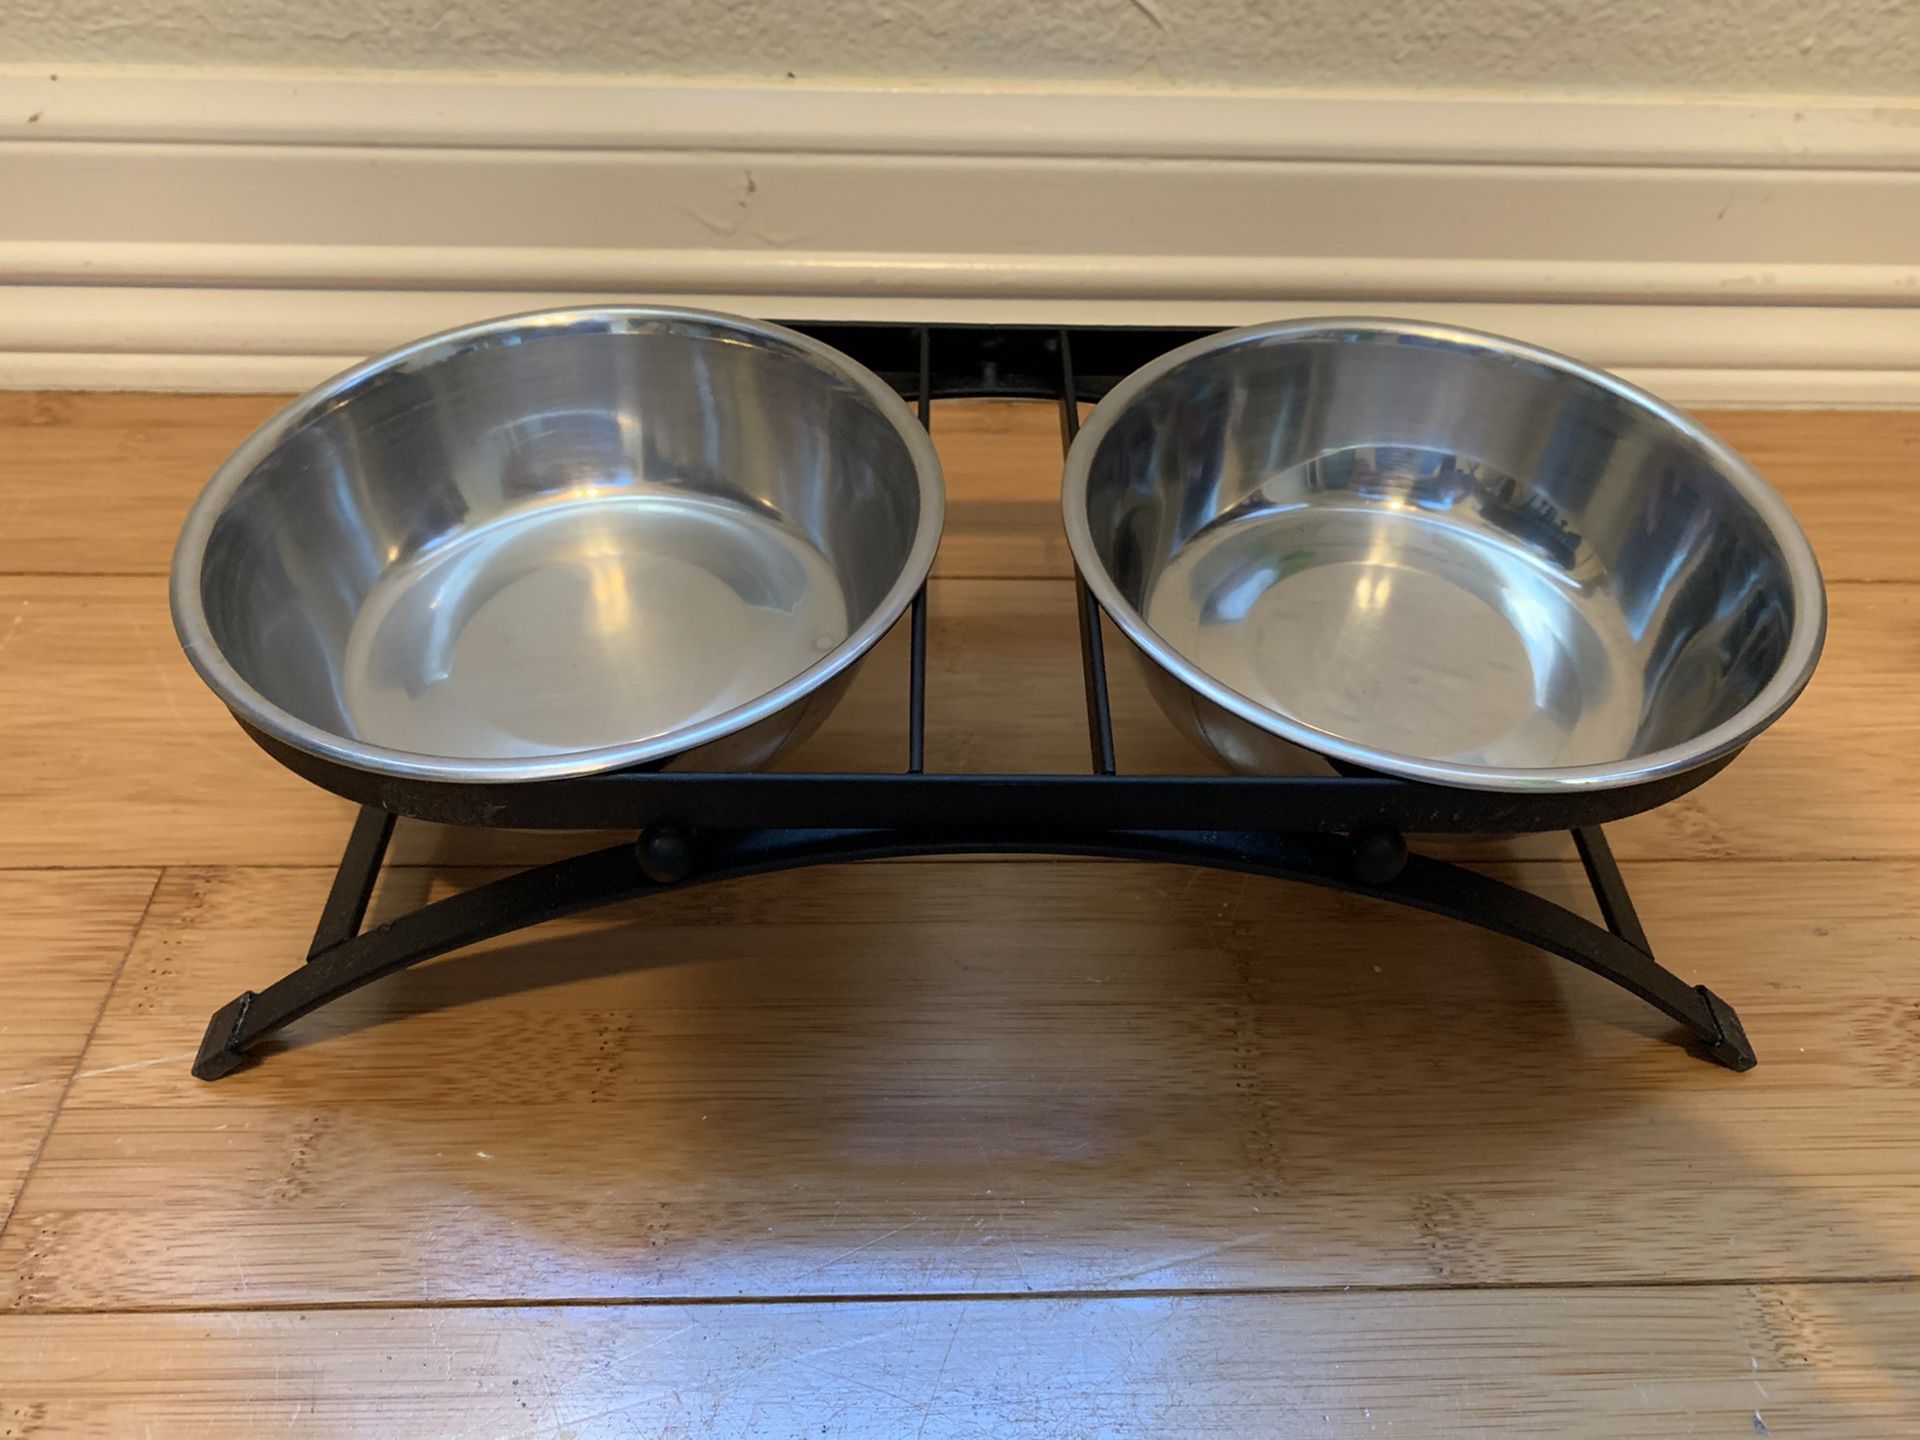 Pet food and water bowl